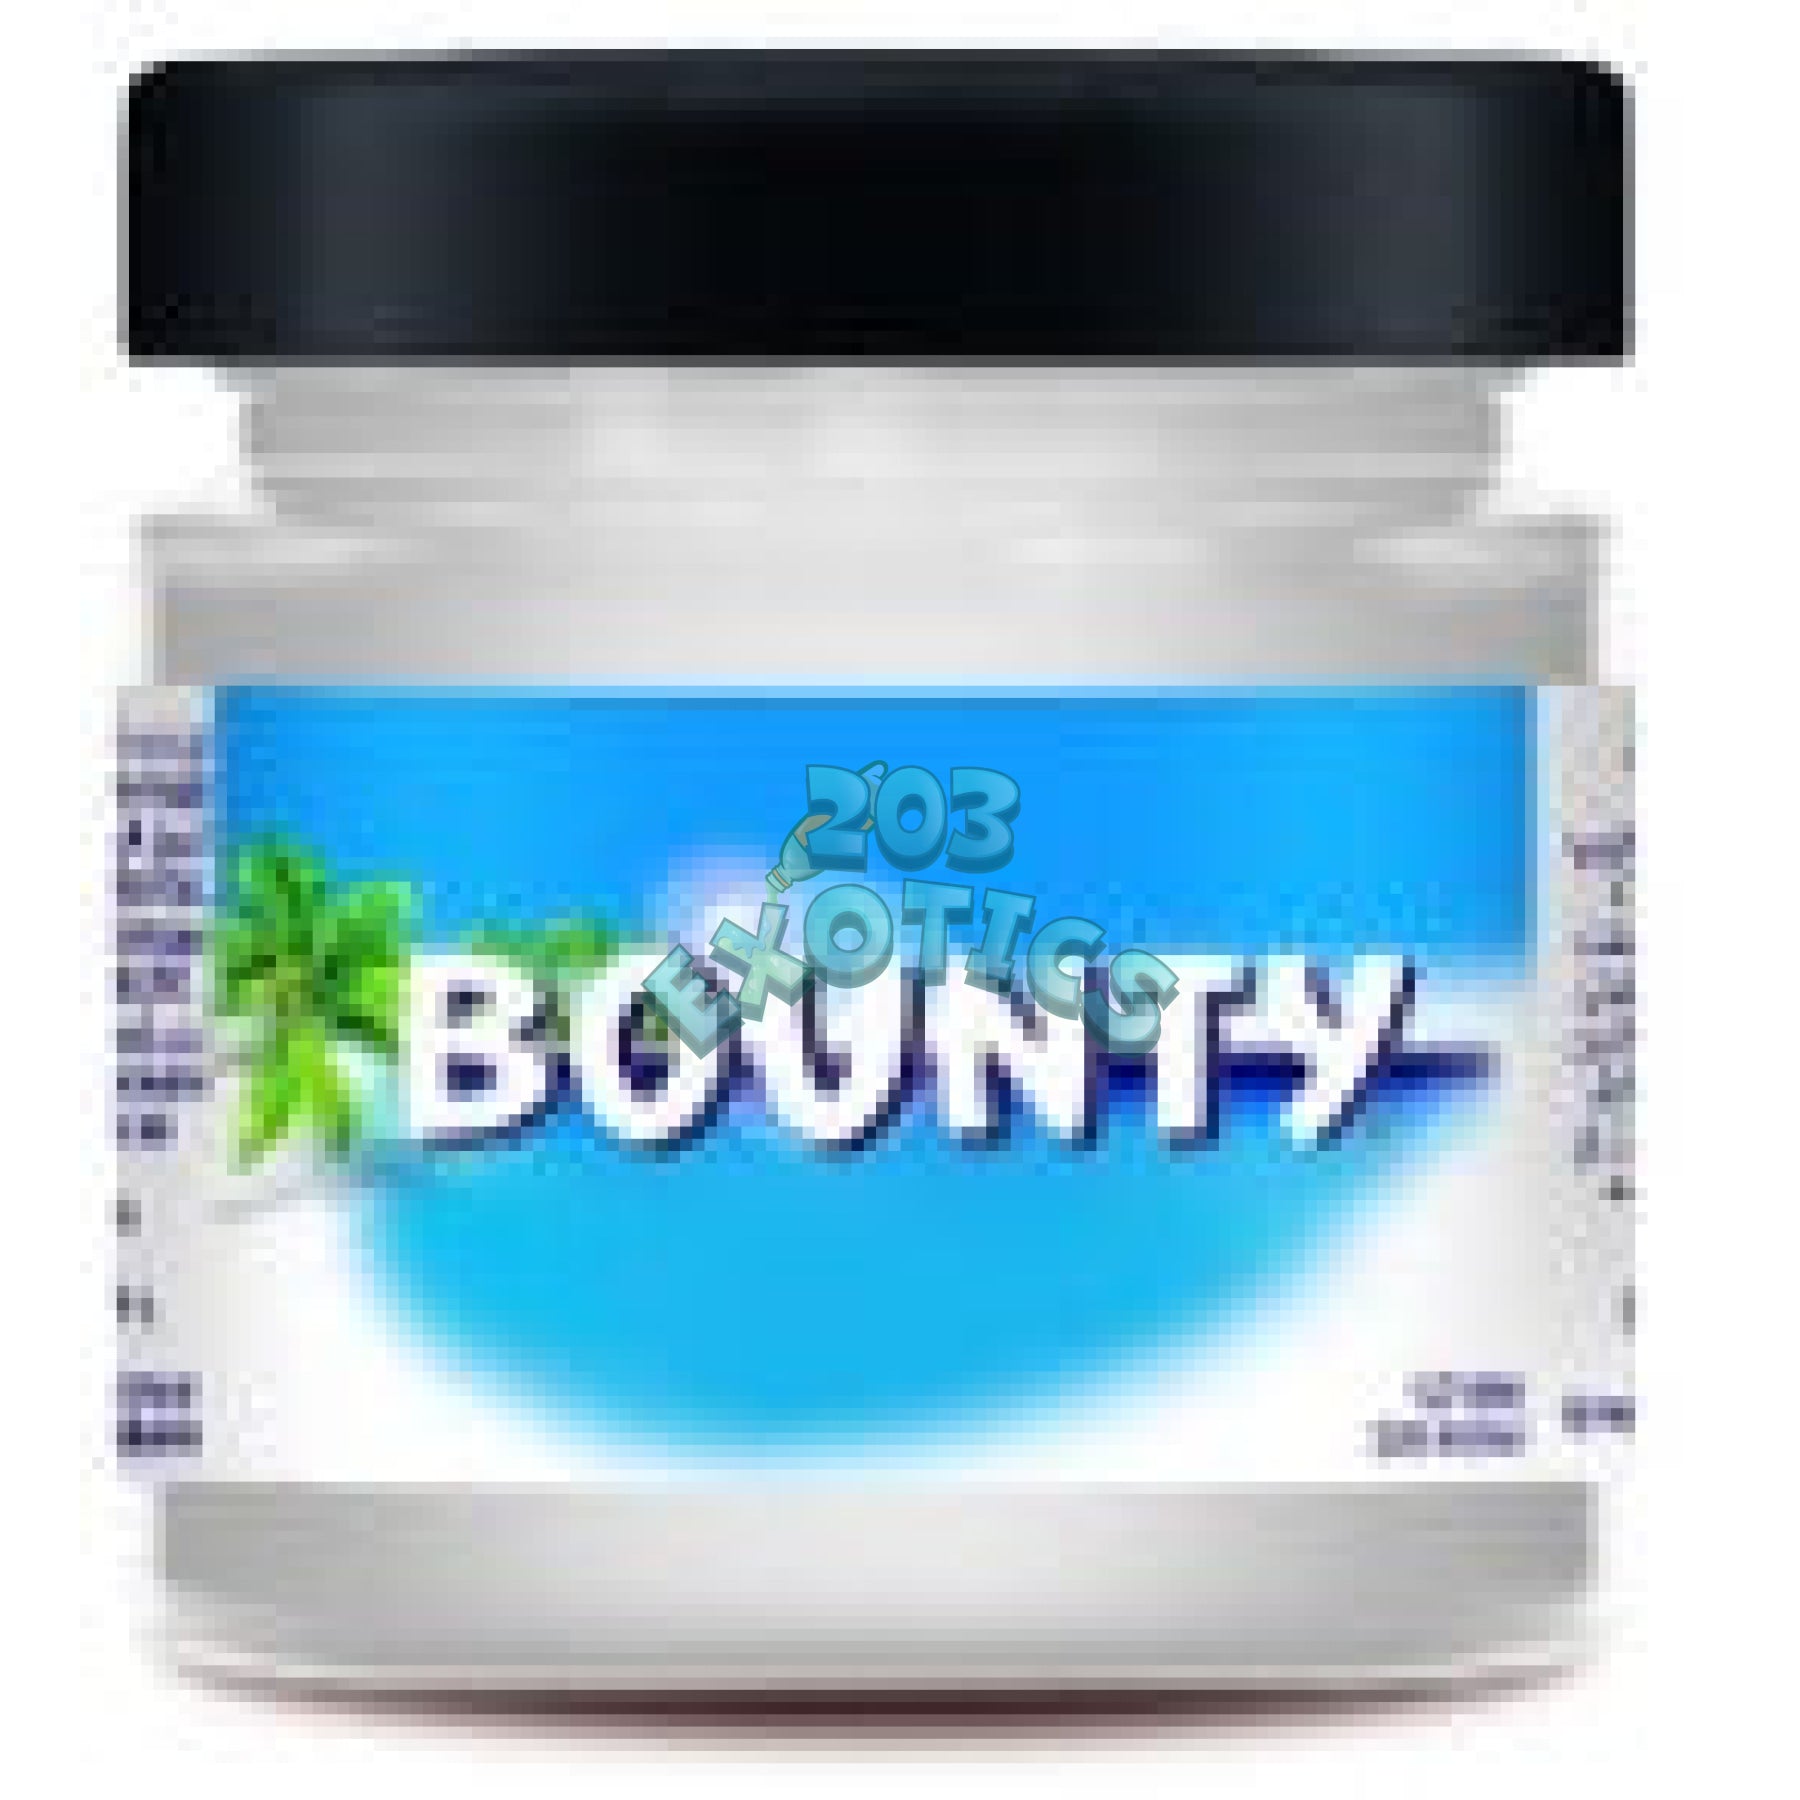 Bounty Spread